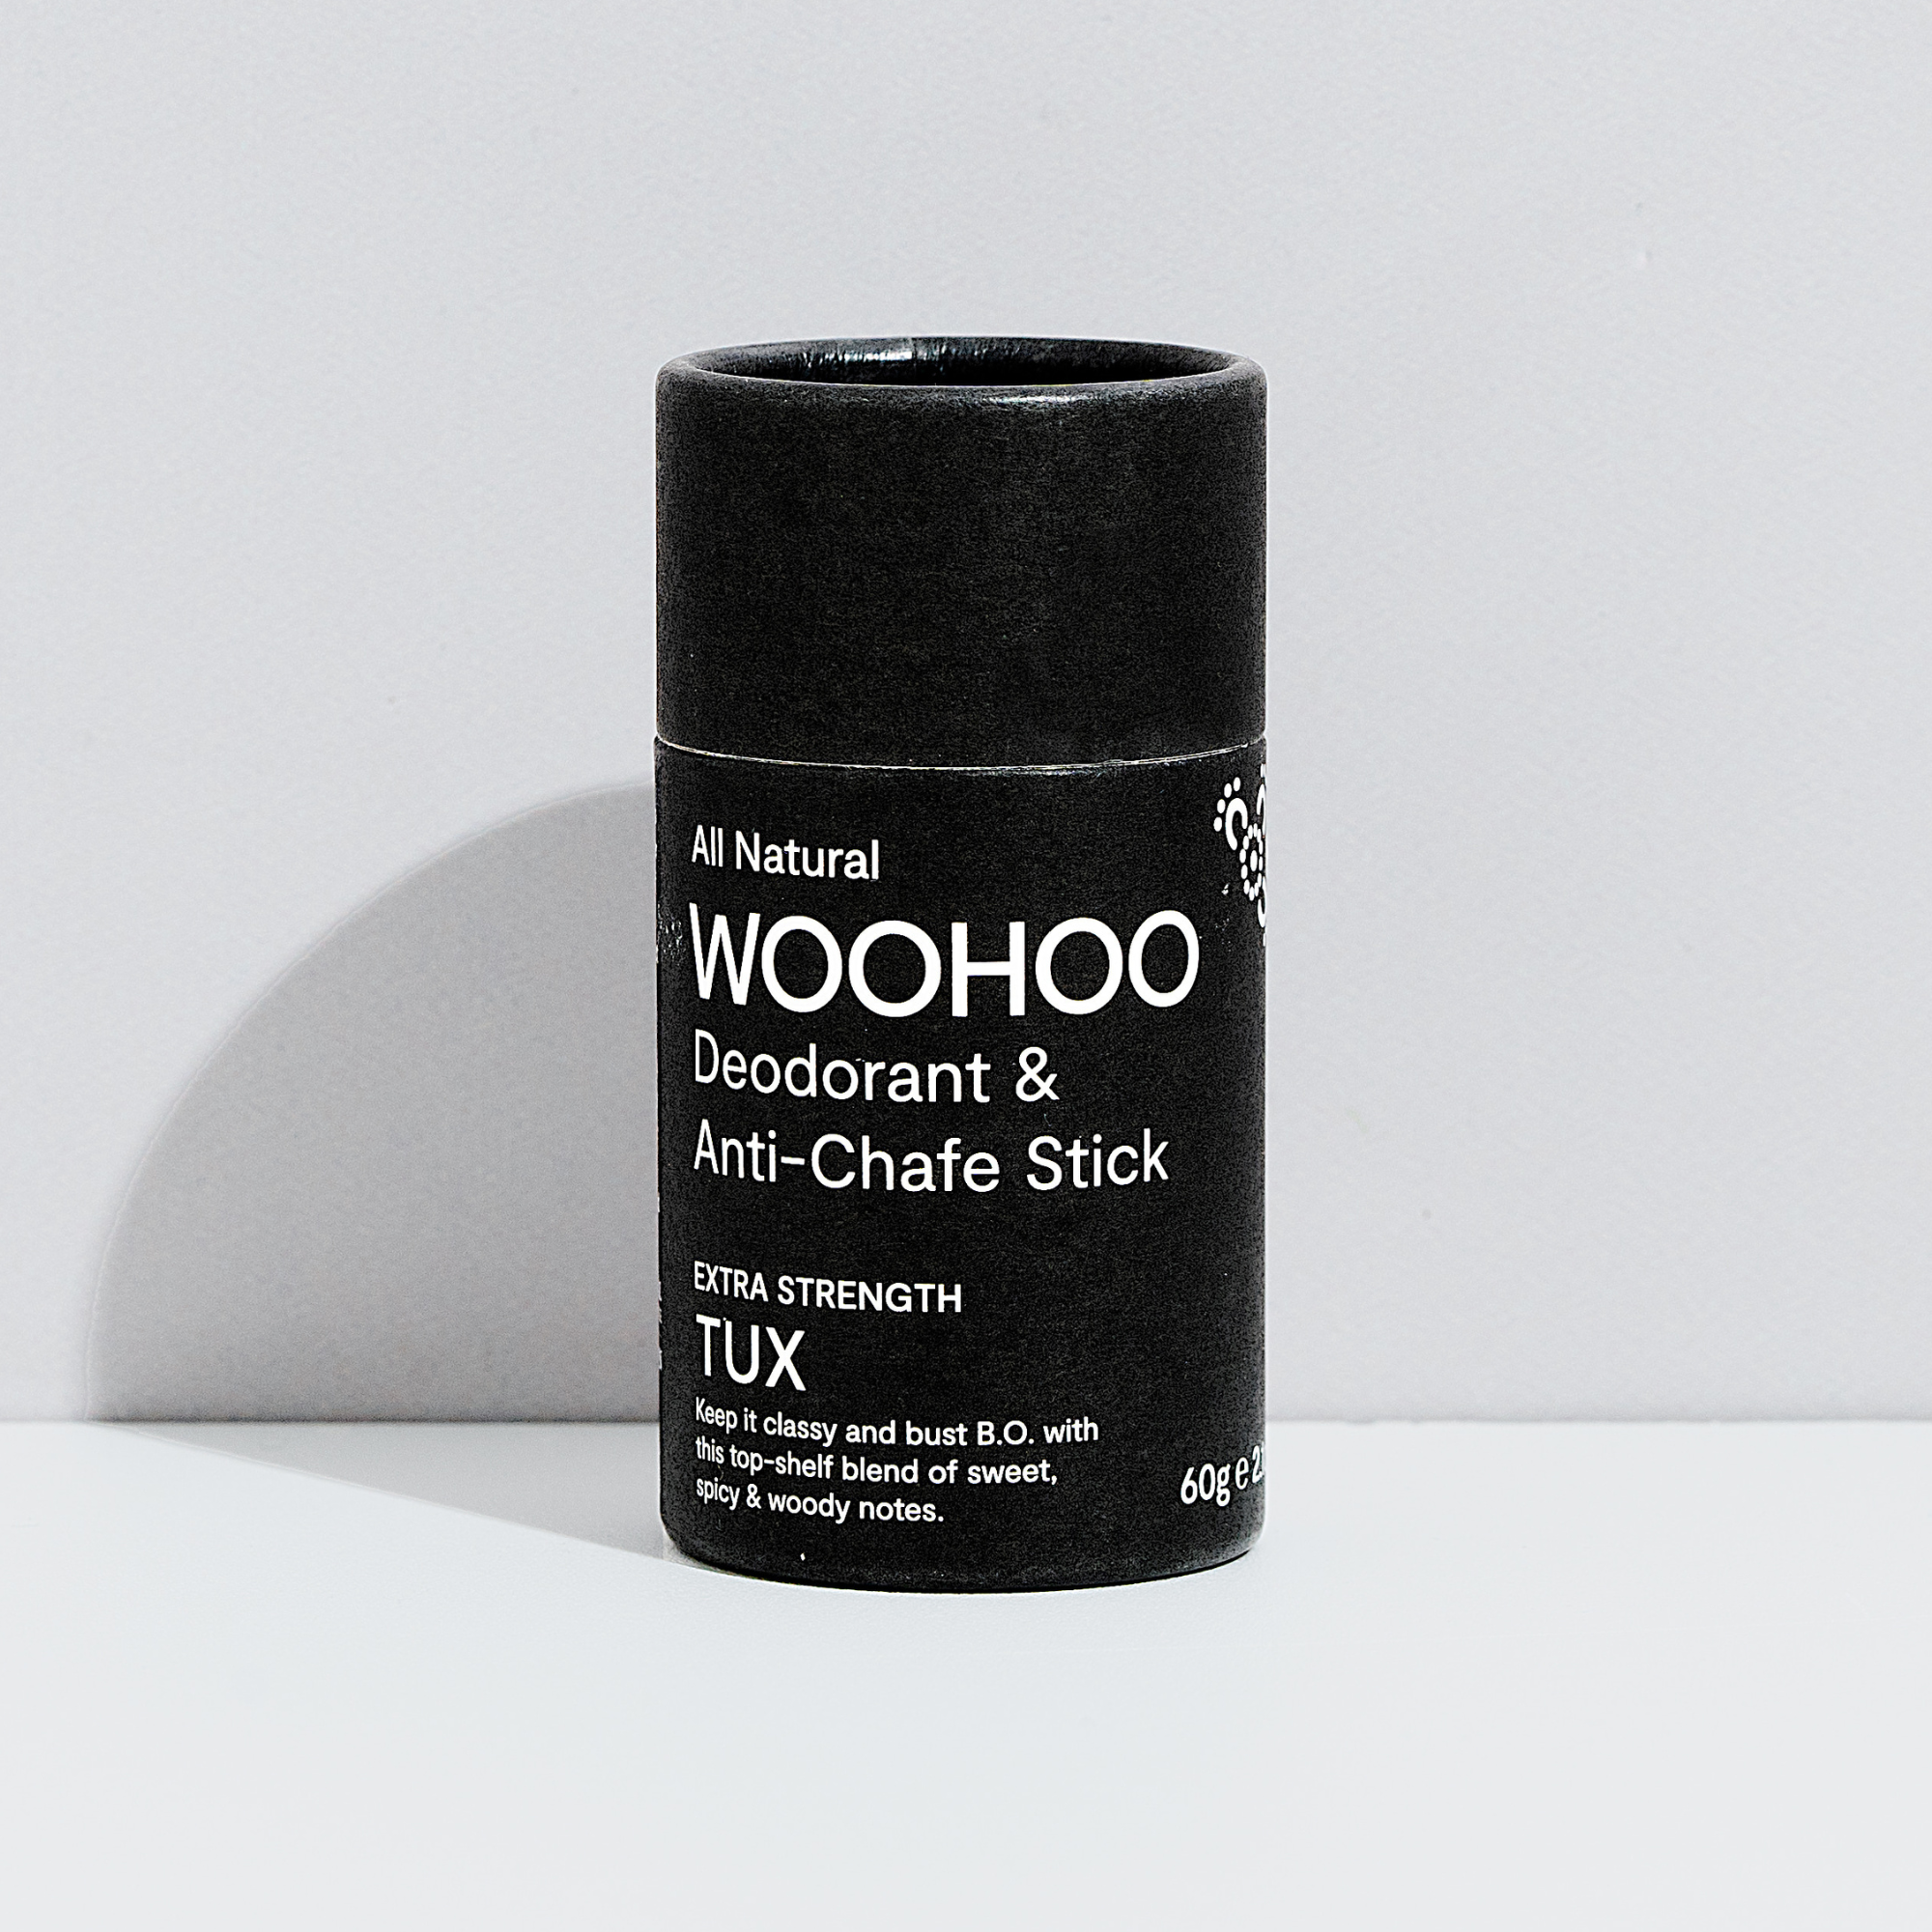 Woohoo Body - Natural Deodorant & Anti-Chafe Stick - Tux (60g)